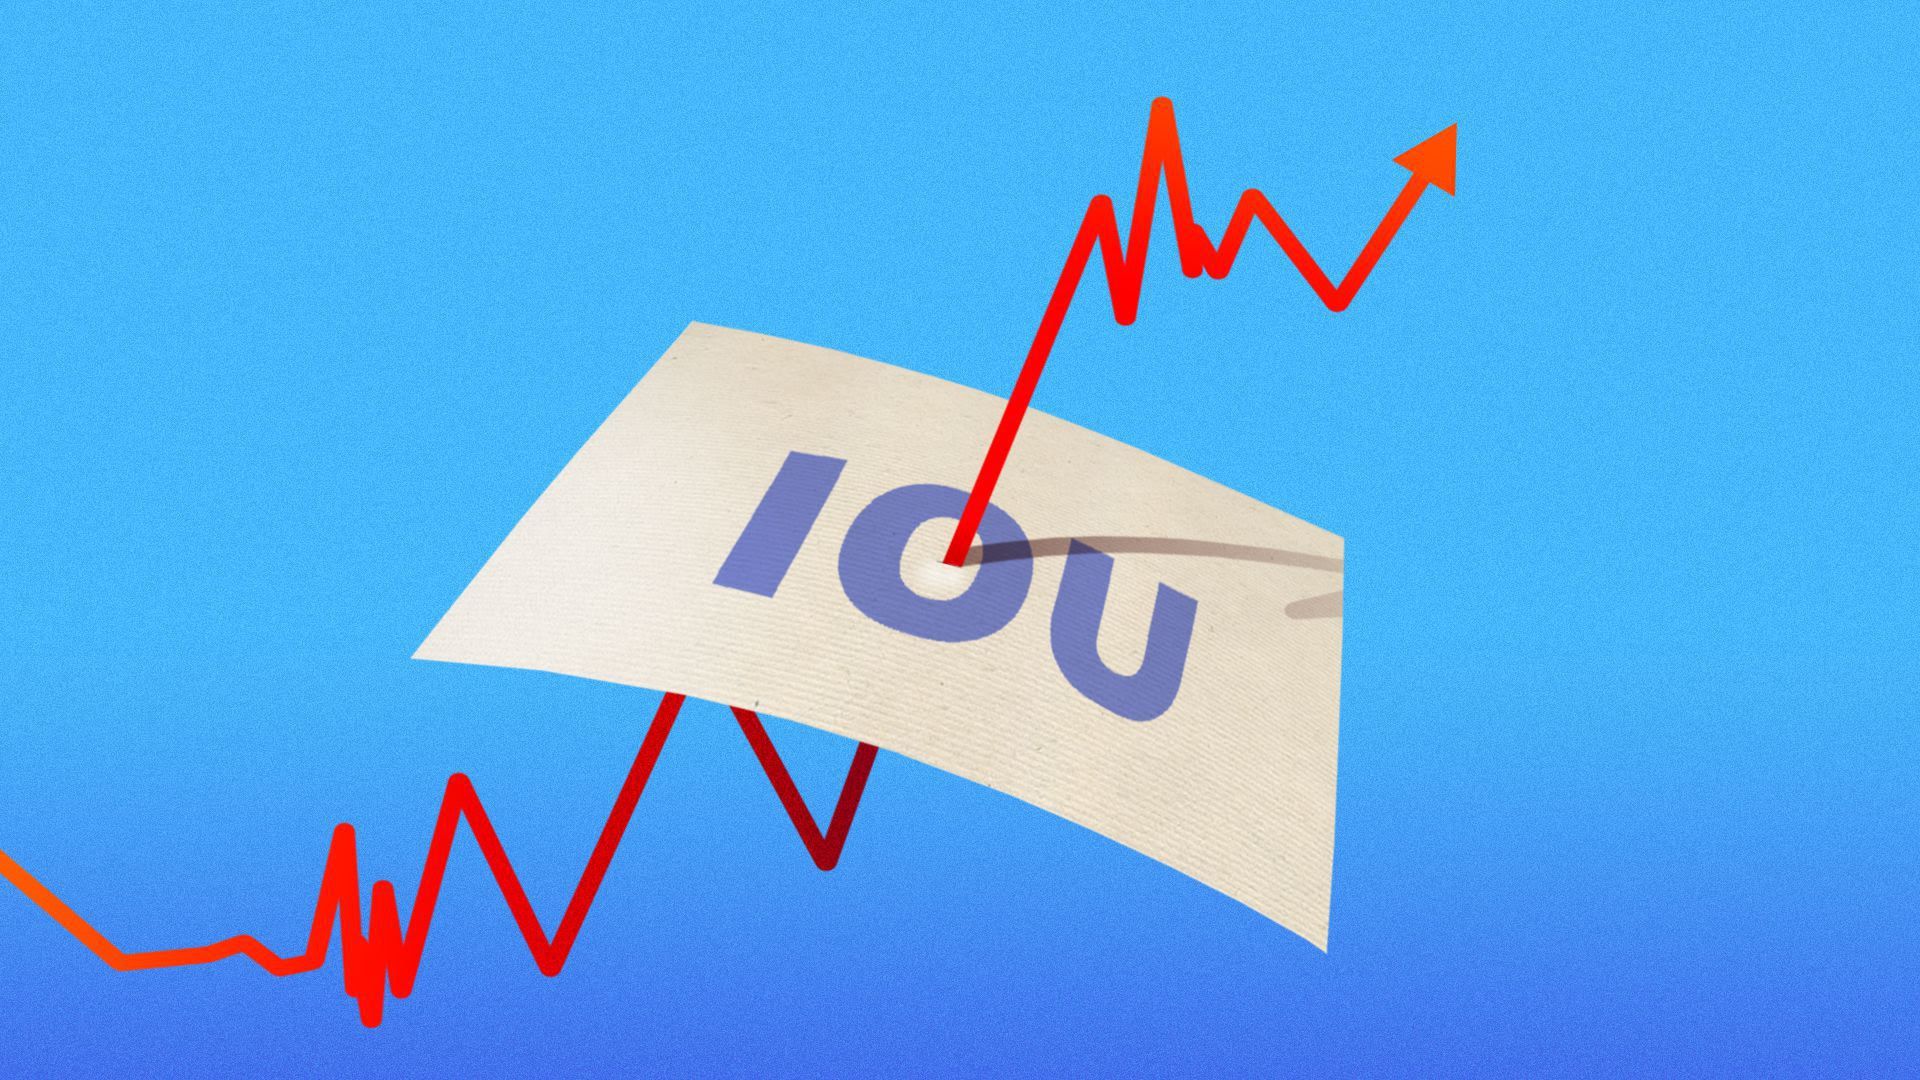 a chart arrow rising through a paper that says "i.o.u"